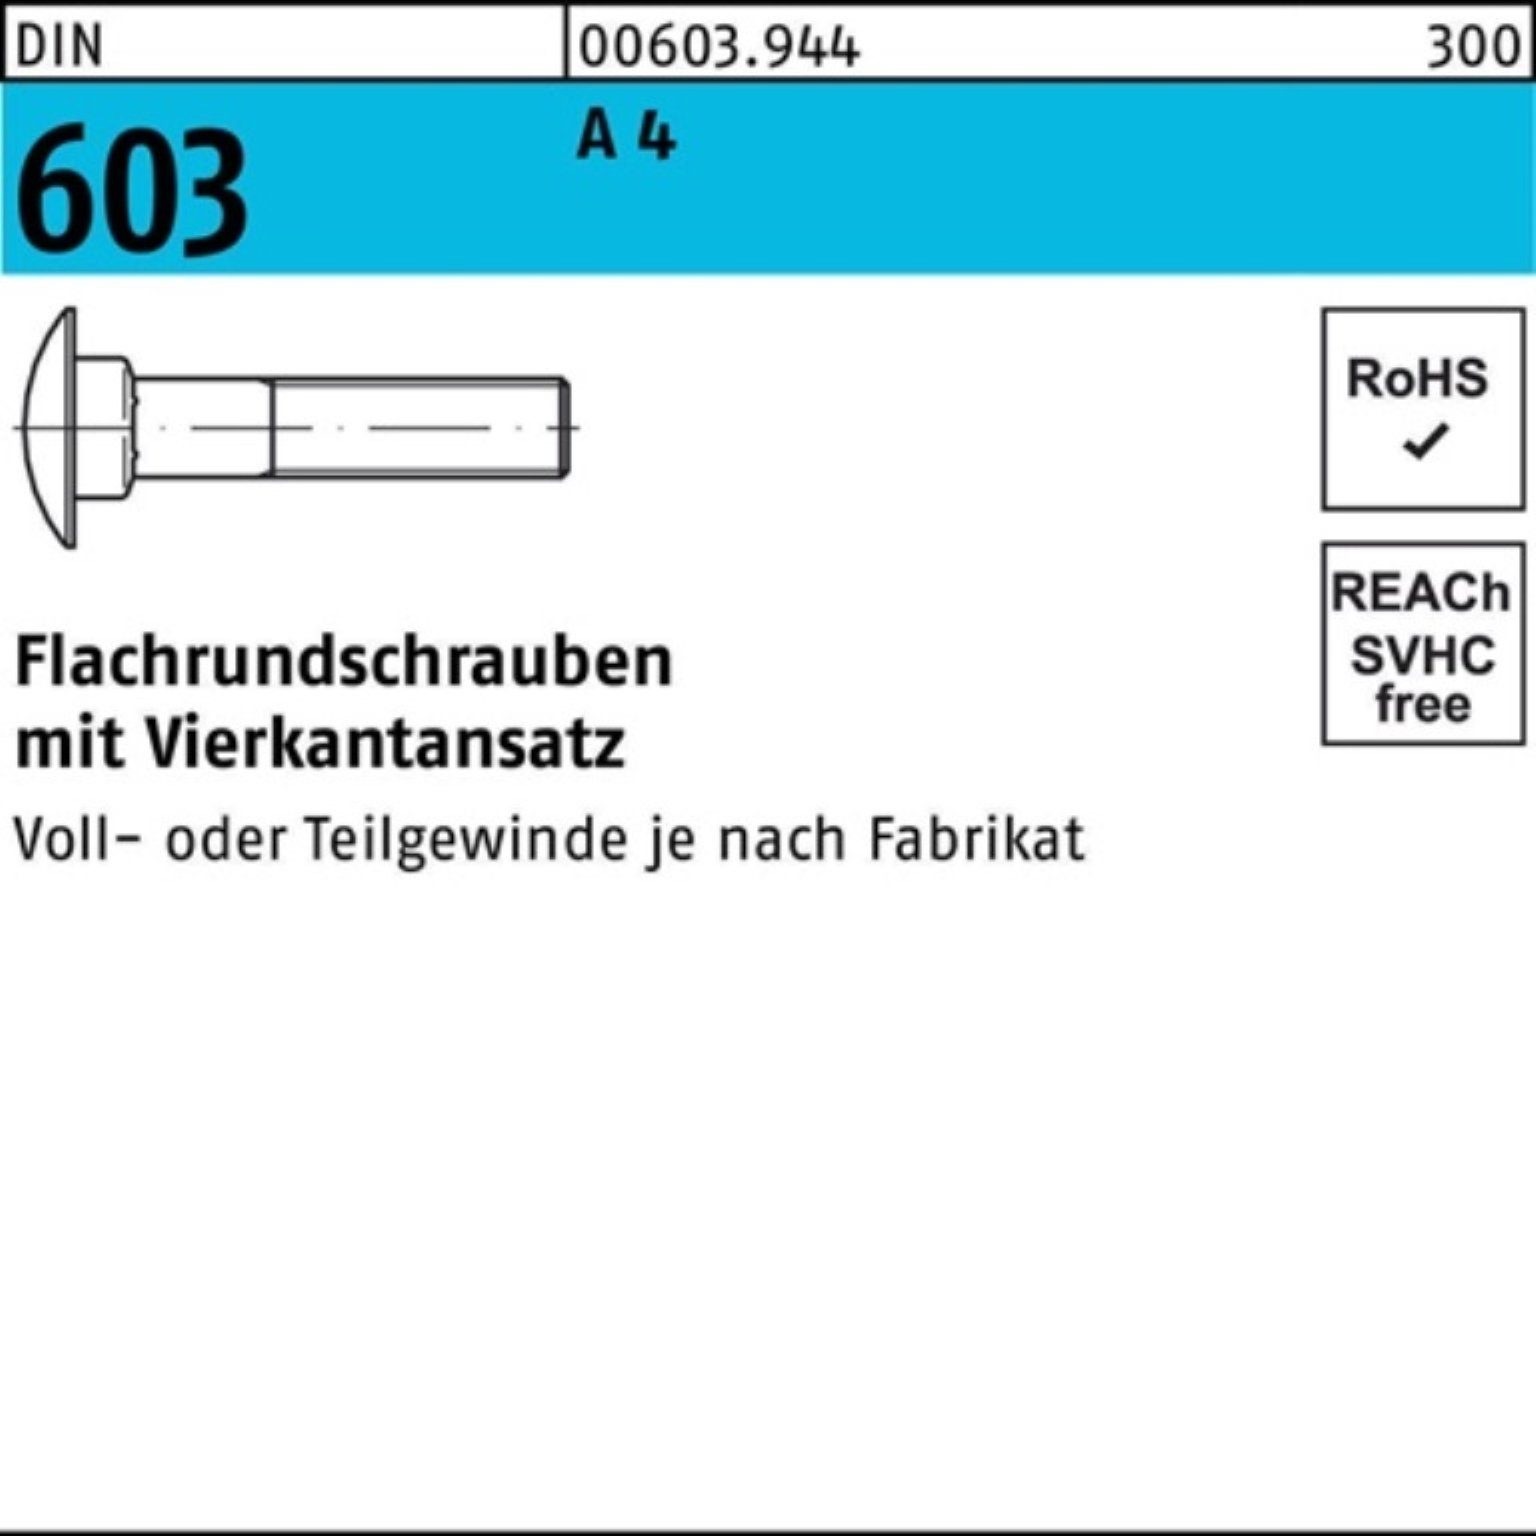 Reyher Schraube 100er Pack Flachrundschraube DIN 603 Vierkantansatz M12x 120 A 4 1 St